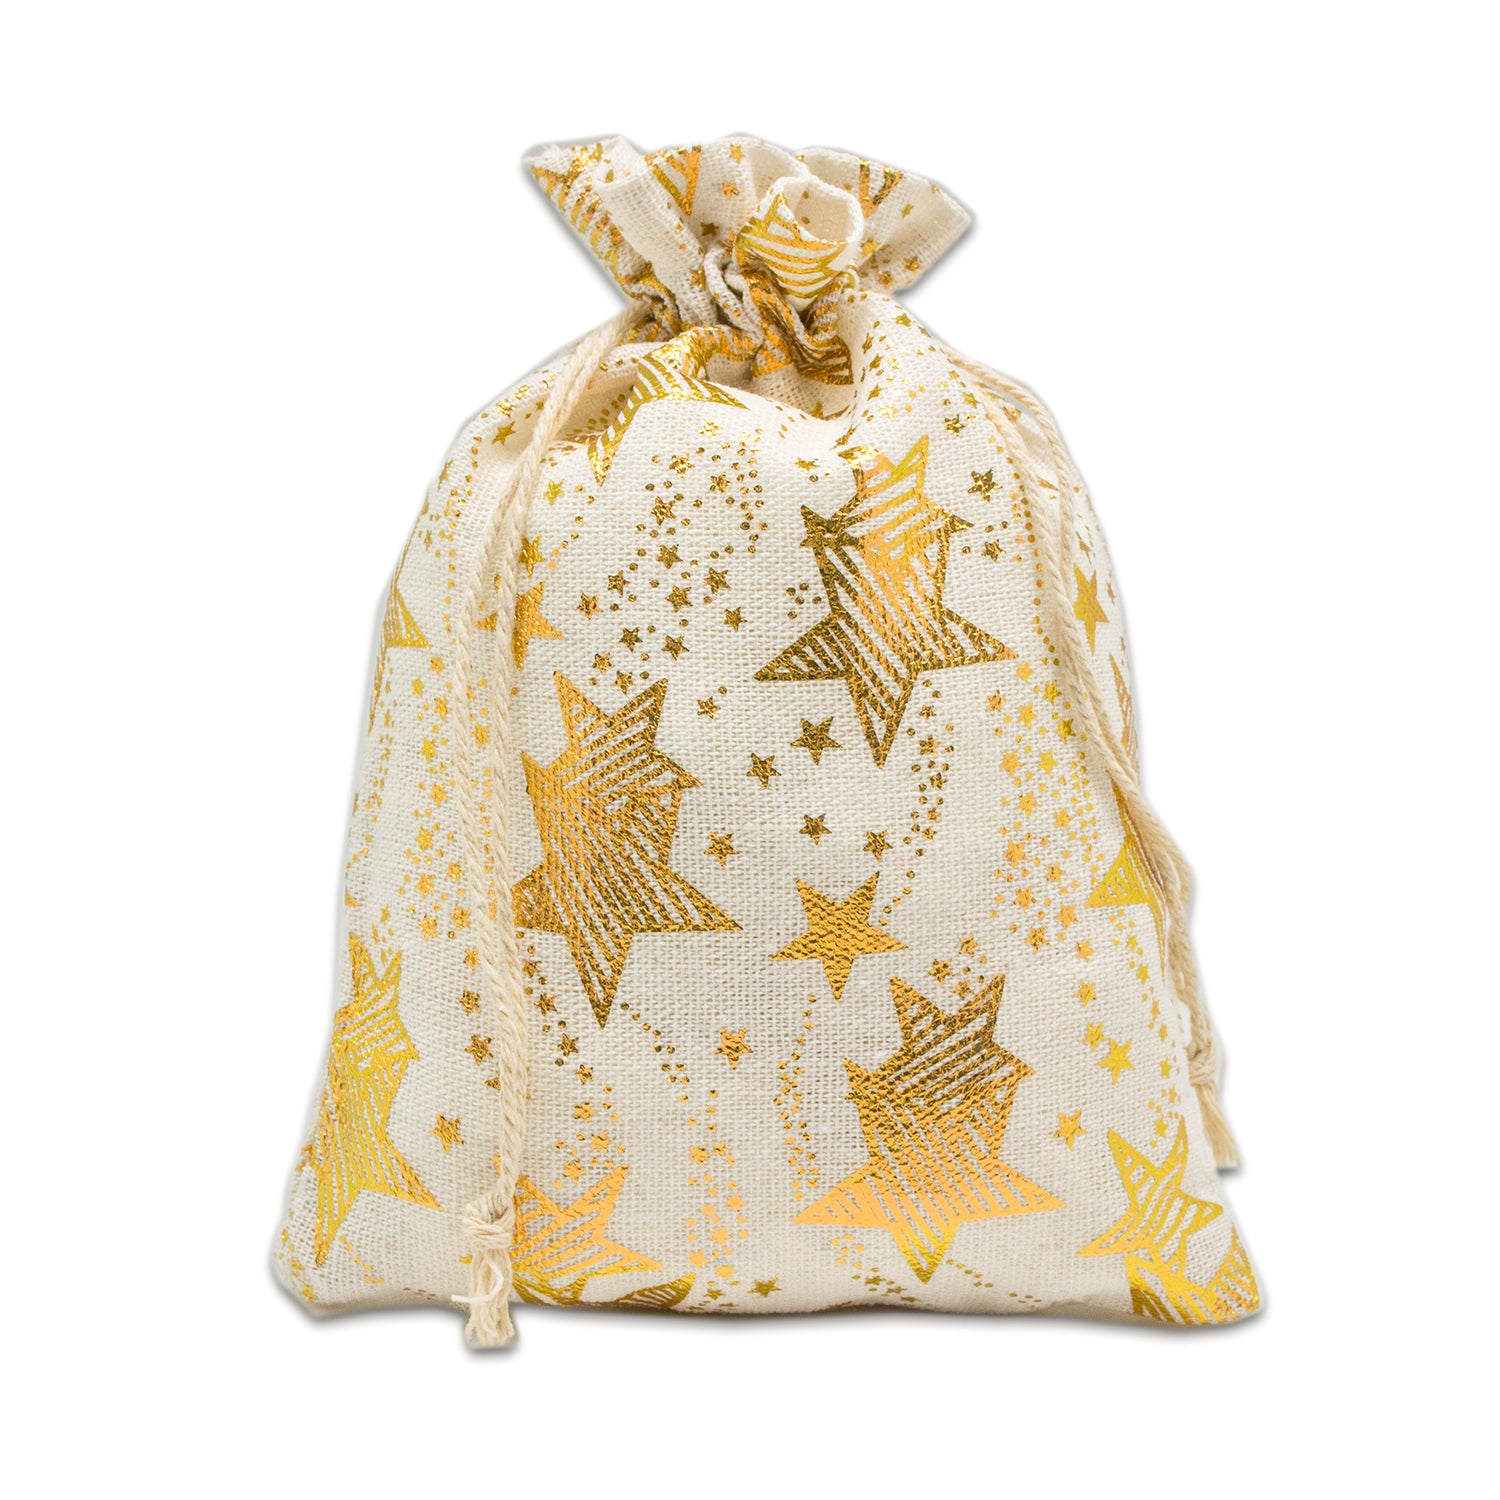 4" x 6" Cotton Muslin Gold Star Drawstring Gift Bags